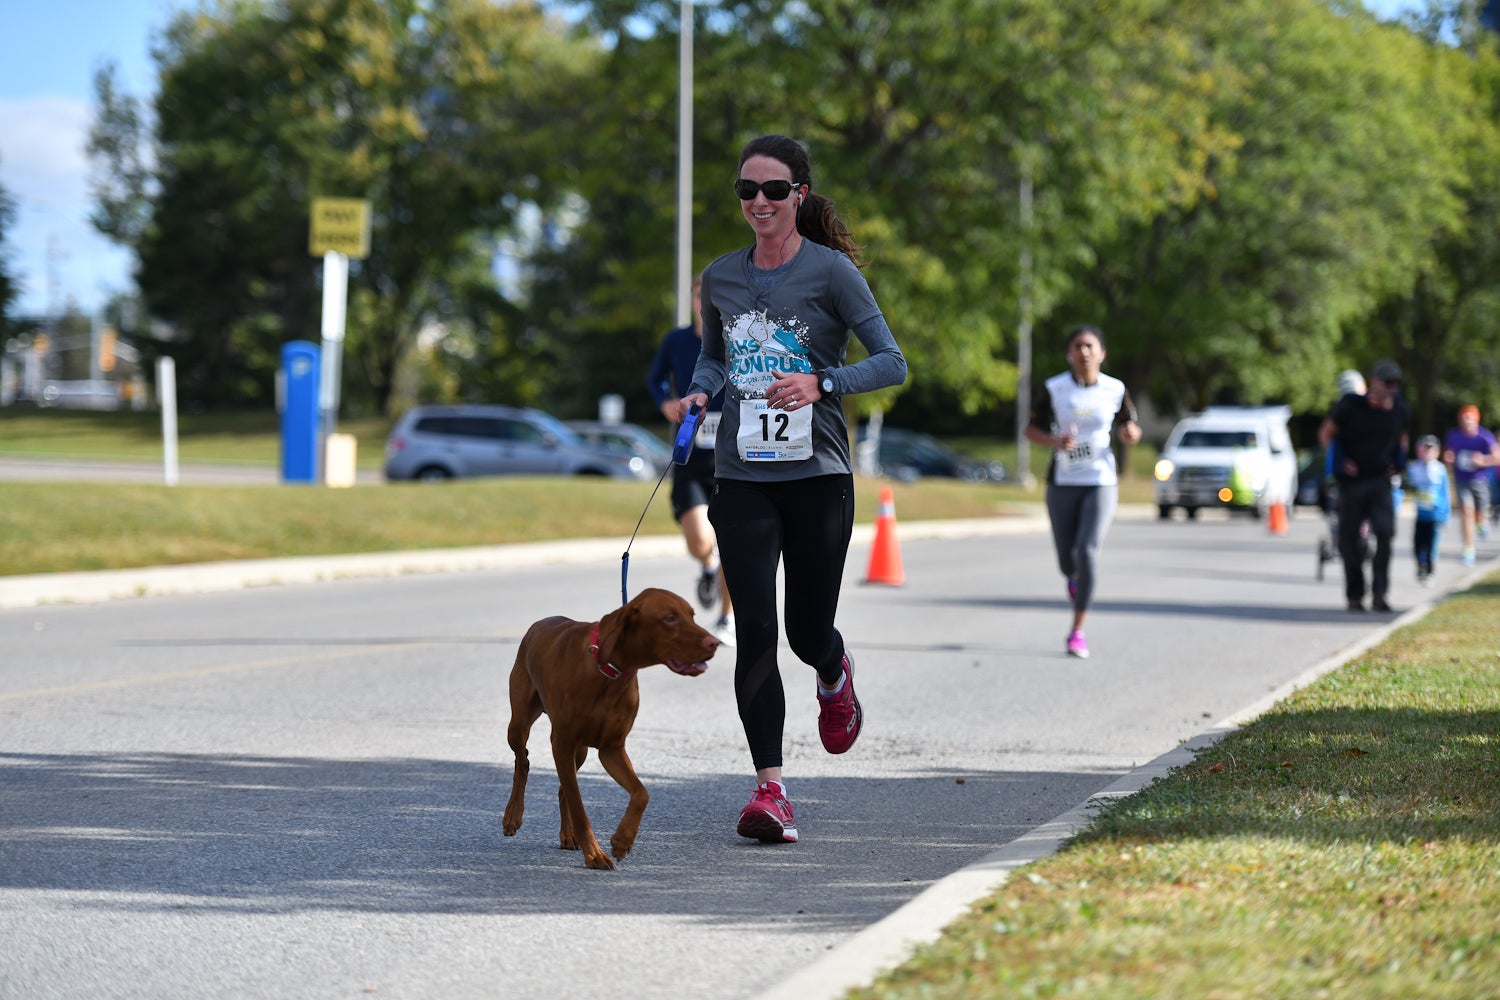 Female Fun Run participant running with a dog